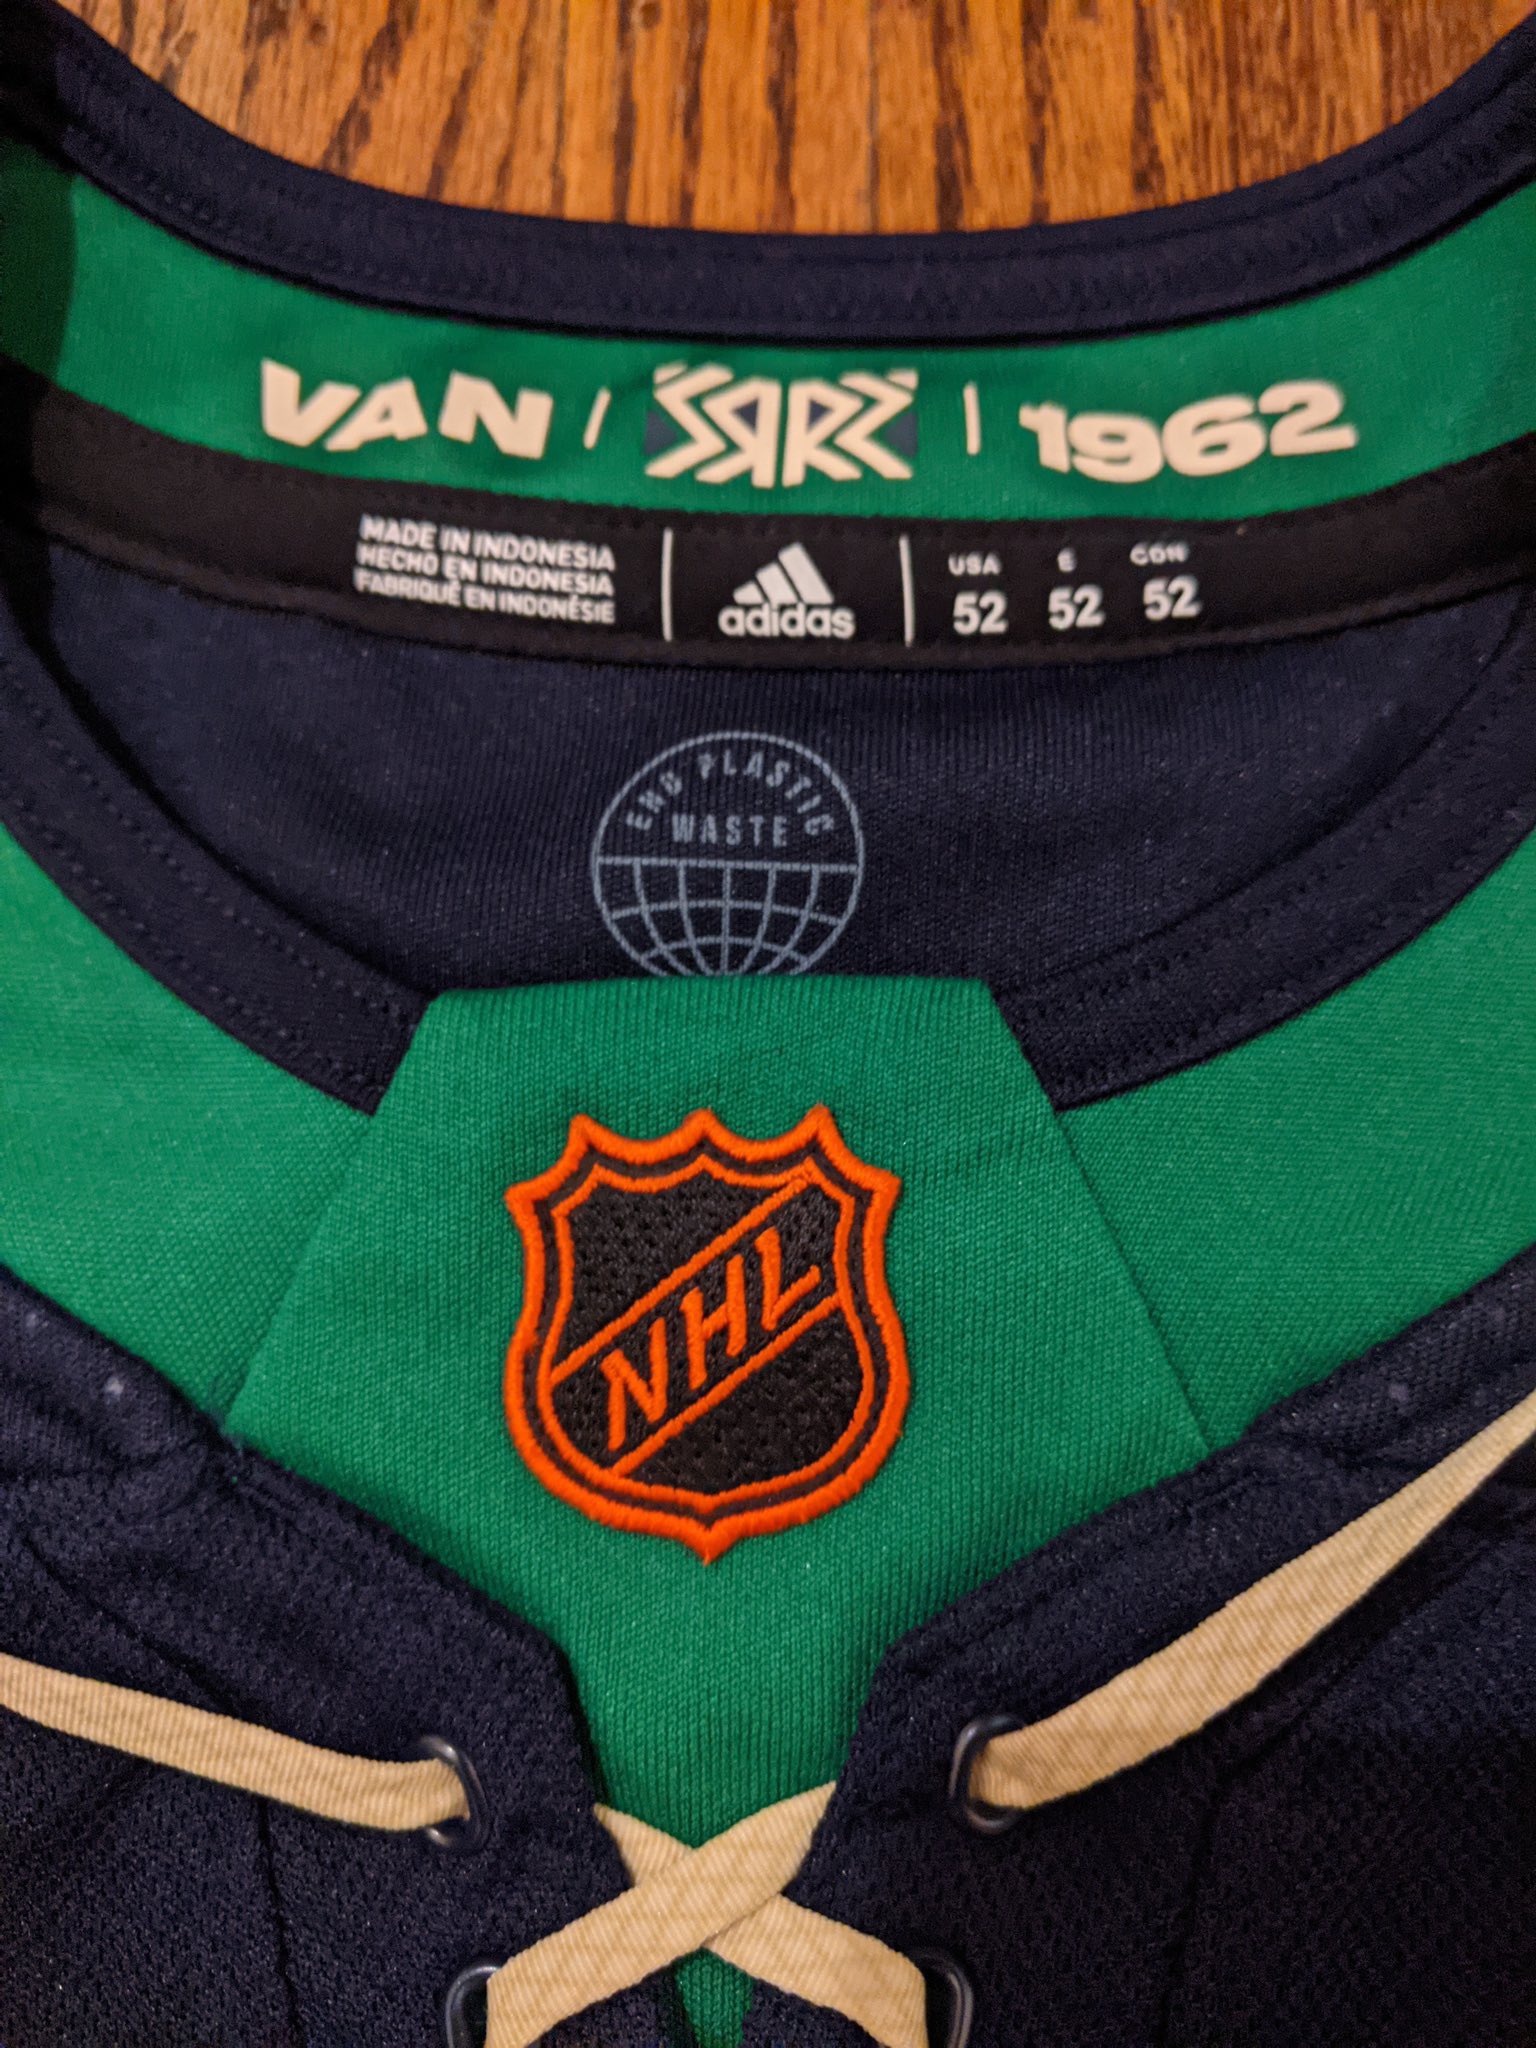 NHL to bring back reverse retro jerseys for 2022-23 season